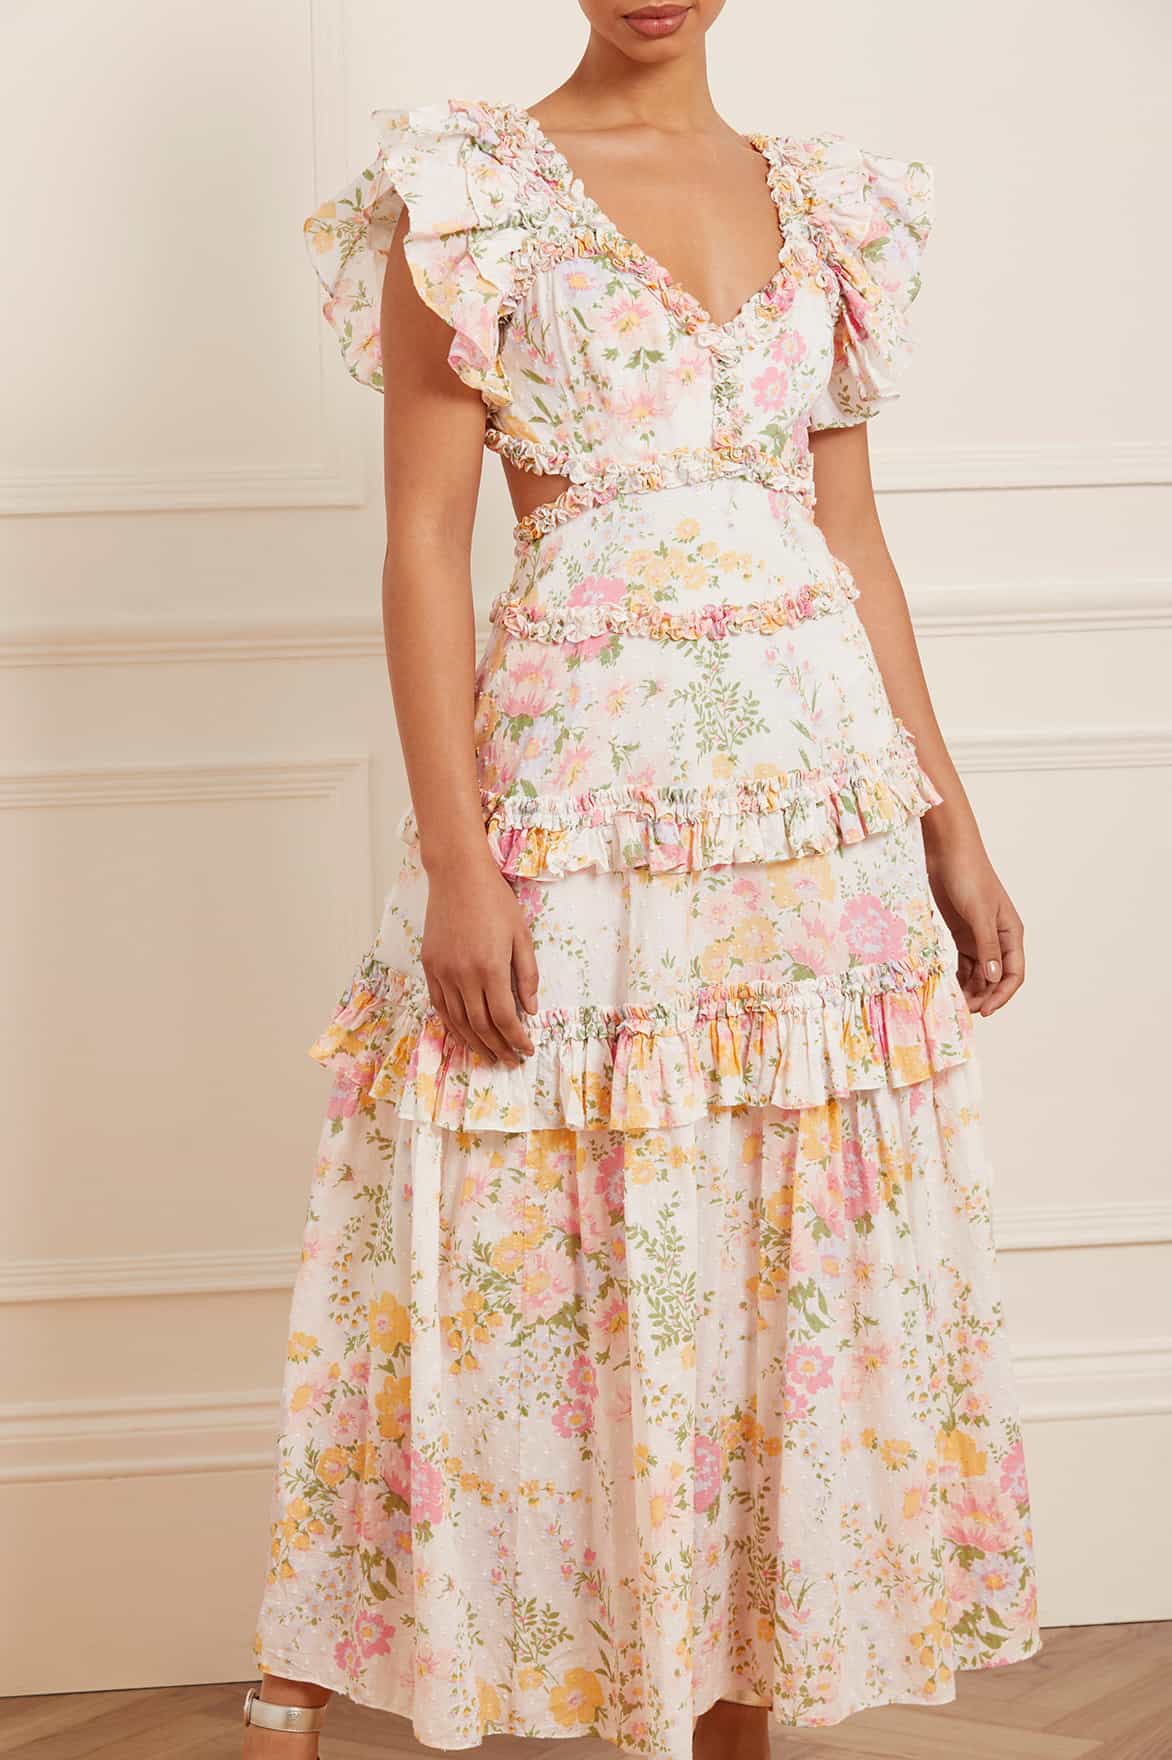 7 Cute Cotton Dresses for Spring: Comfortable Cotton Dresses